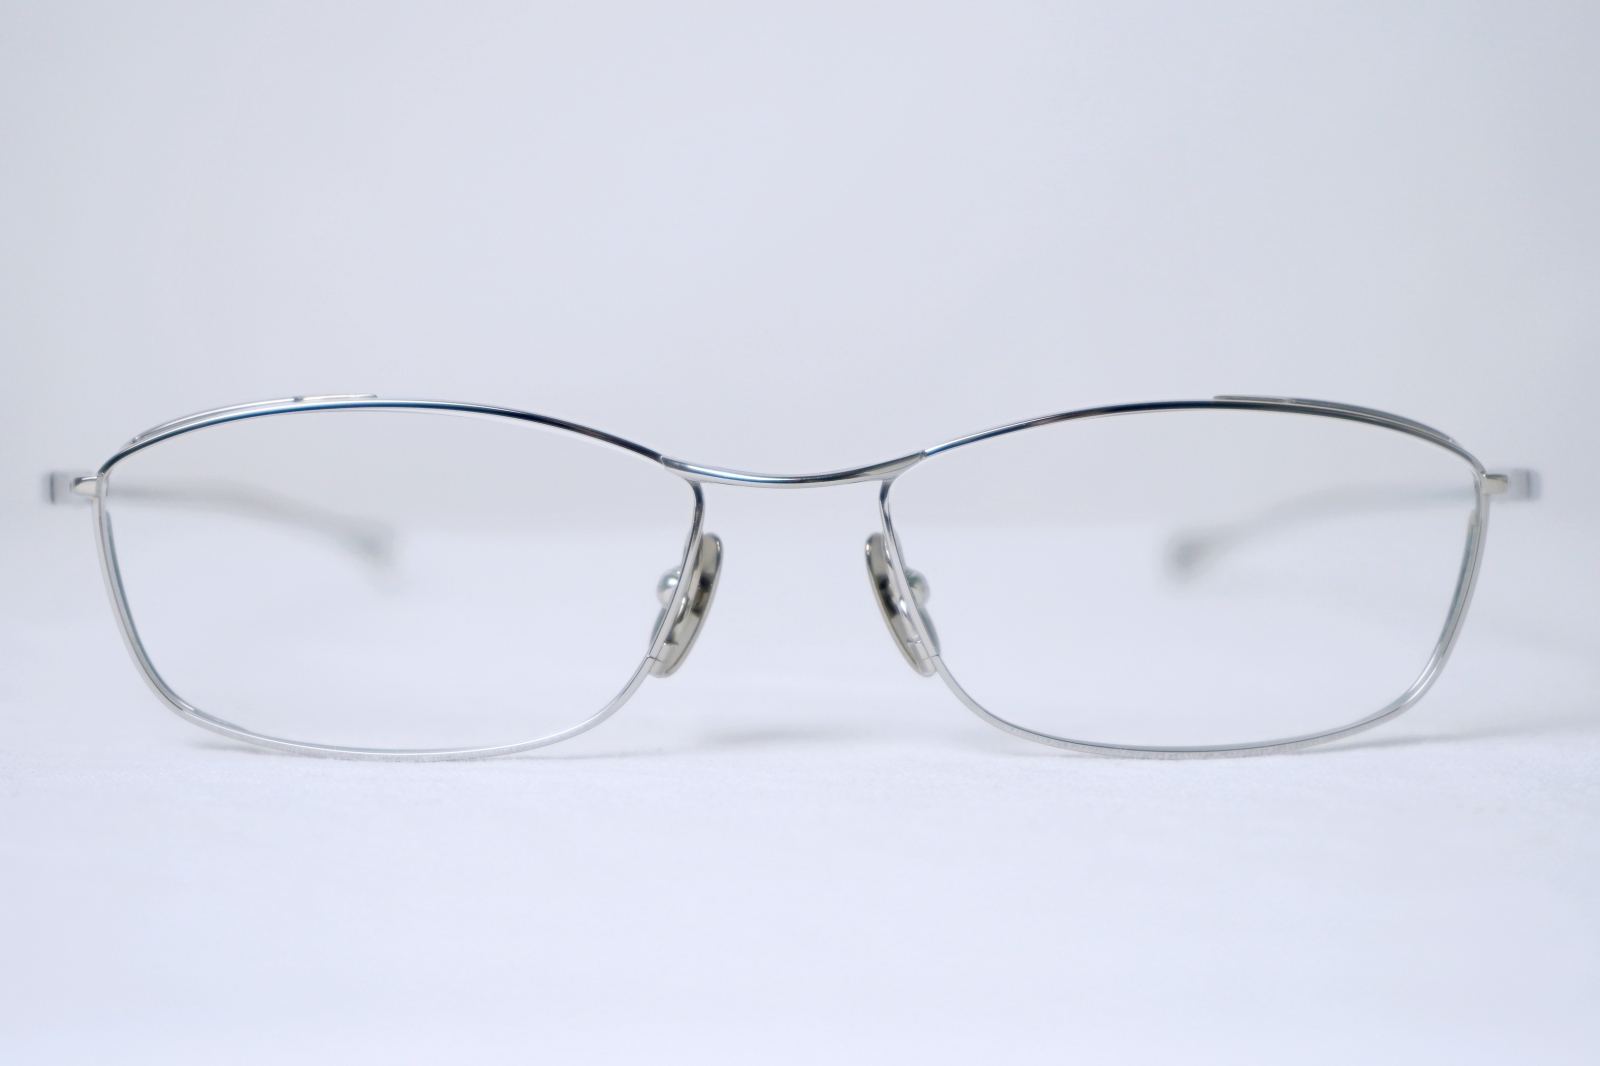 JAPONISM ジャポニズム チタン製 眼鏡 JN-403 04 56□18 - サングラス ...